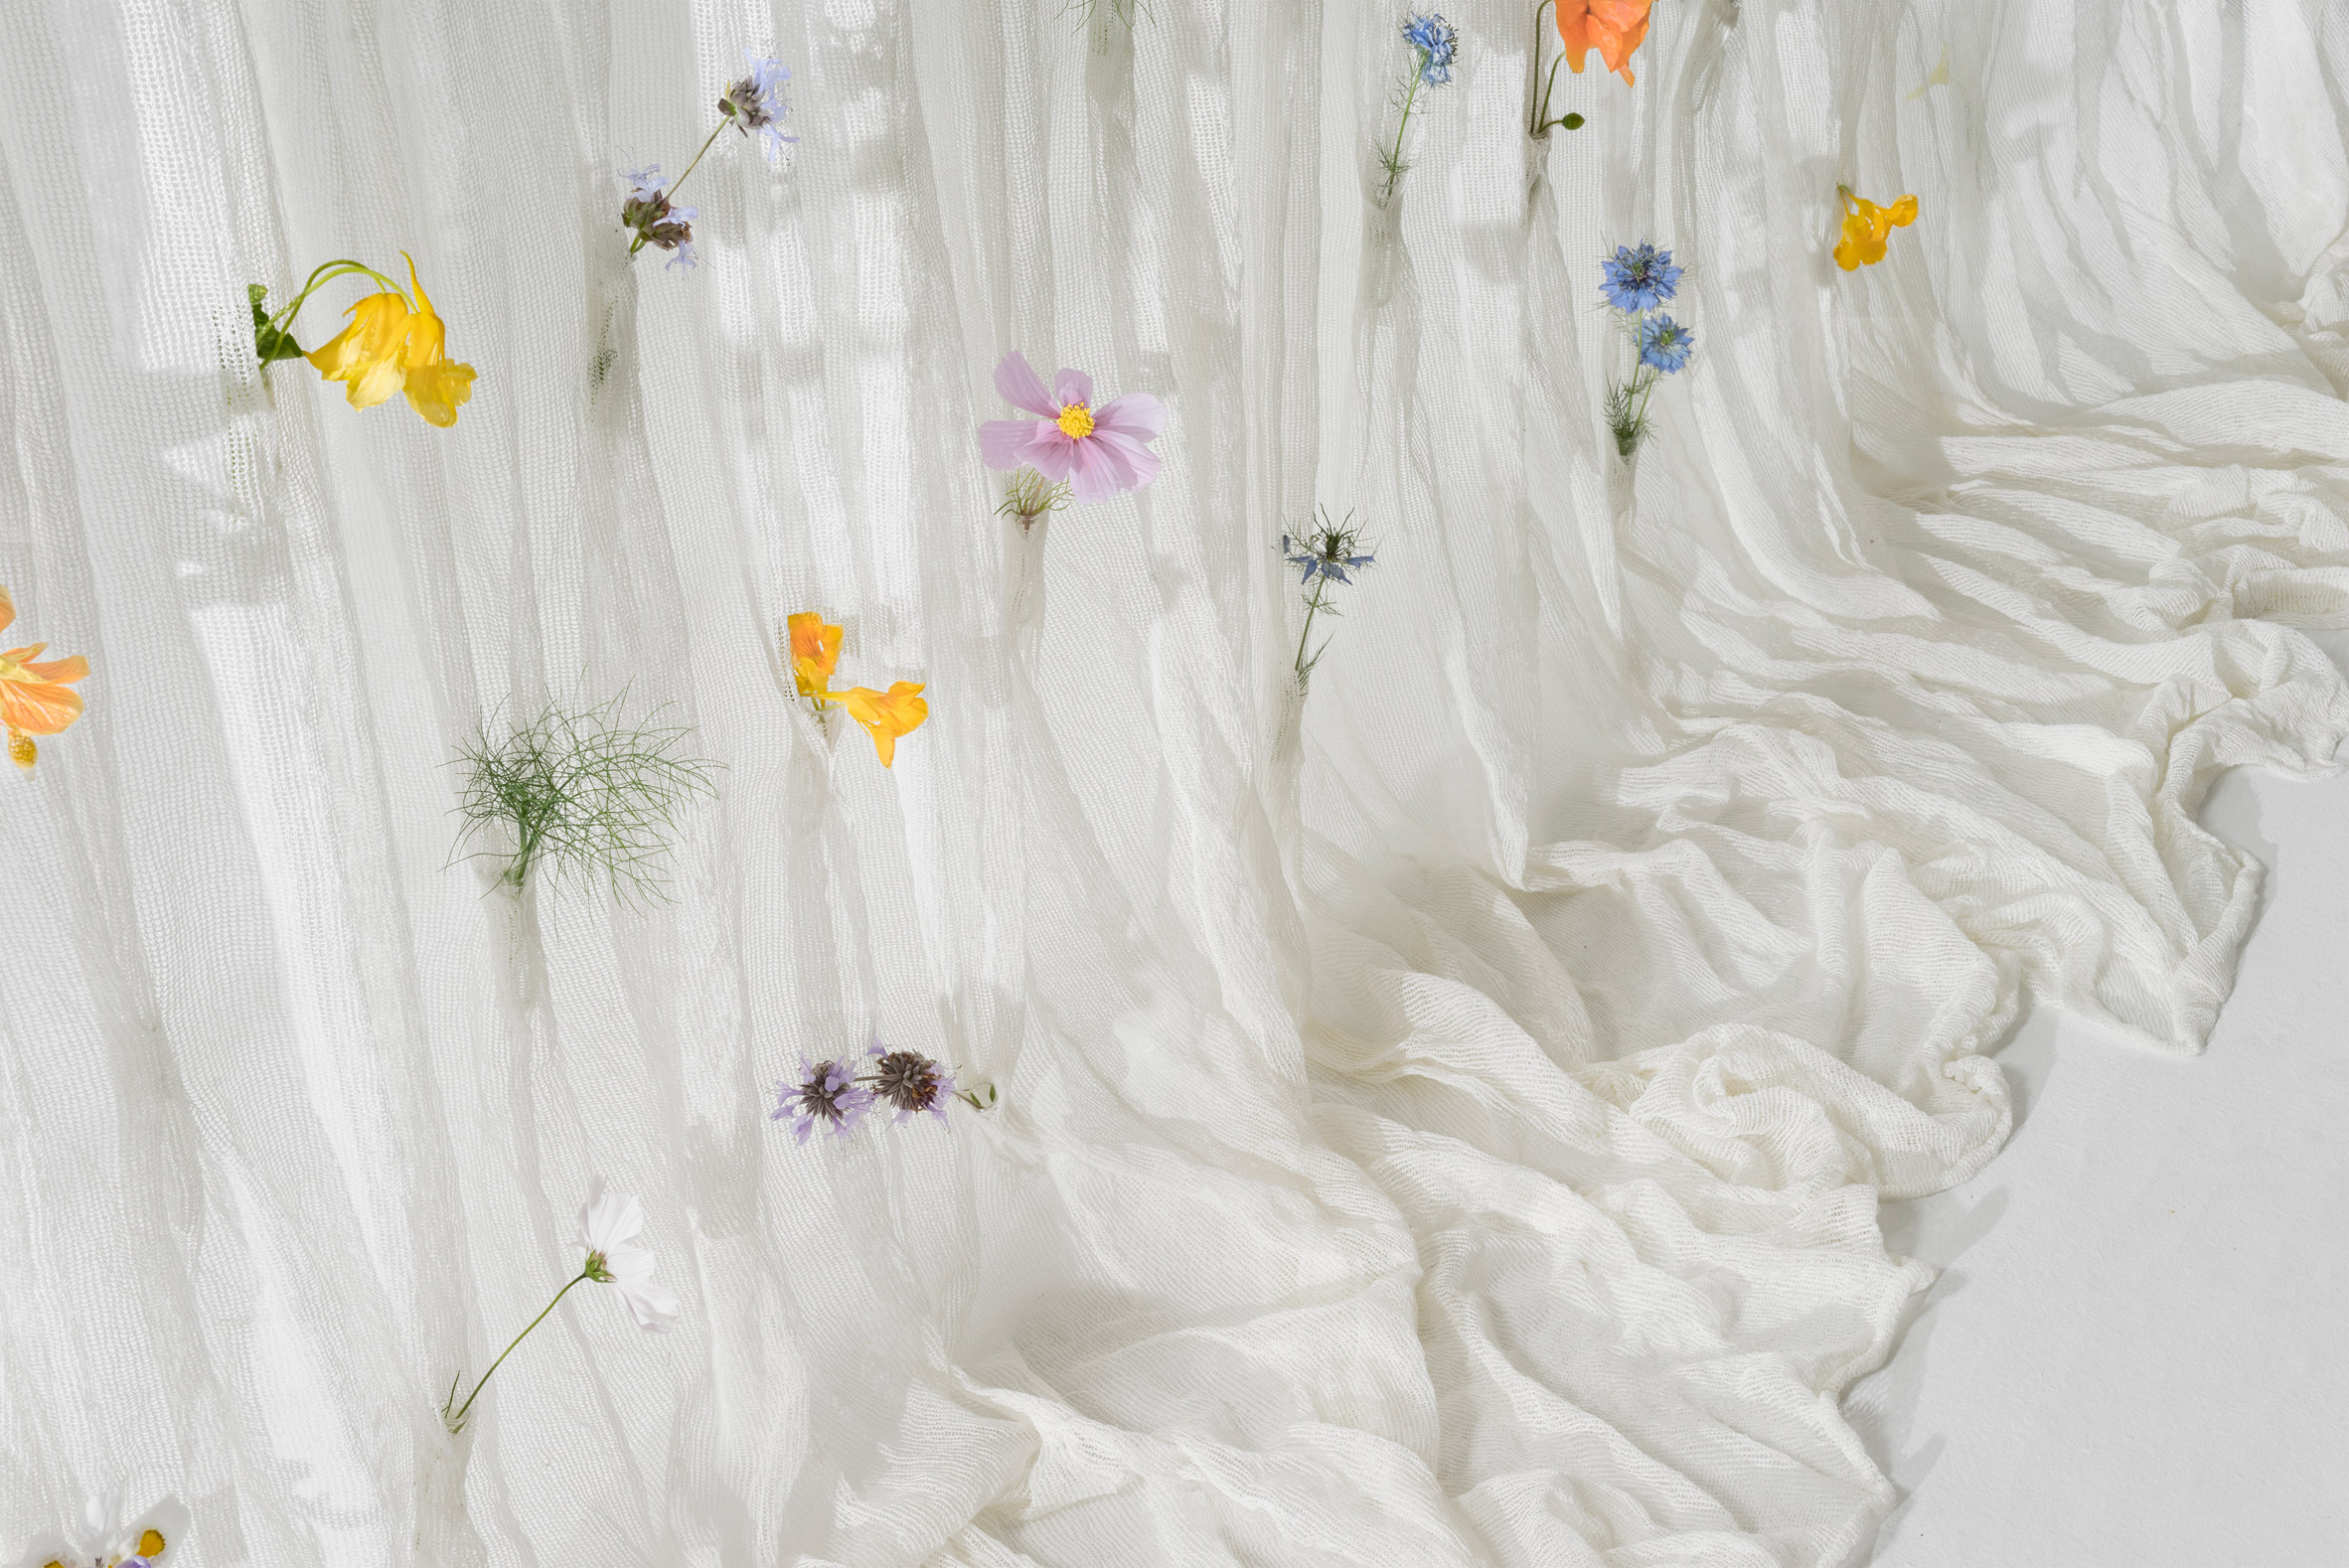 Draped Flowers Curtain by Umé Studio